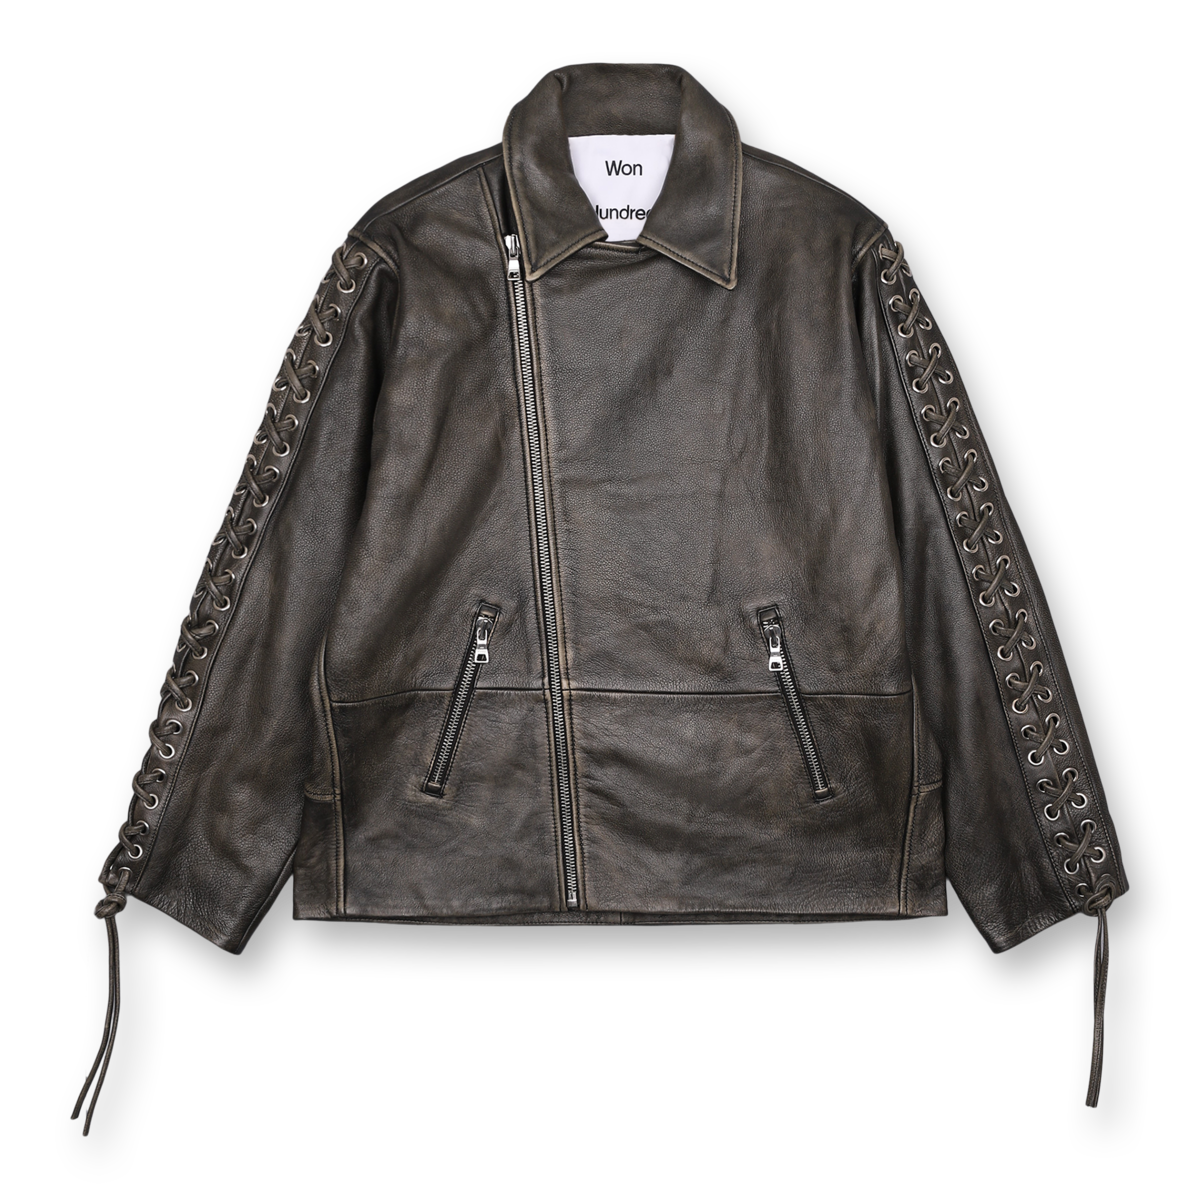 Peyton Leather Jacket